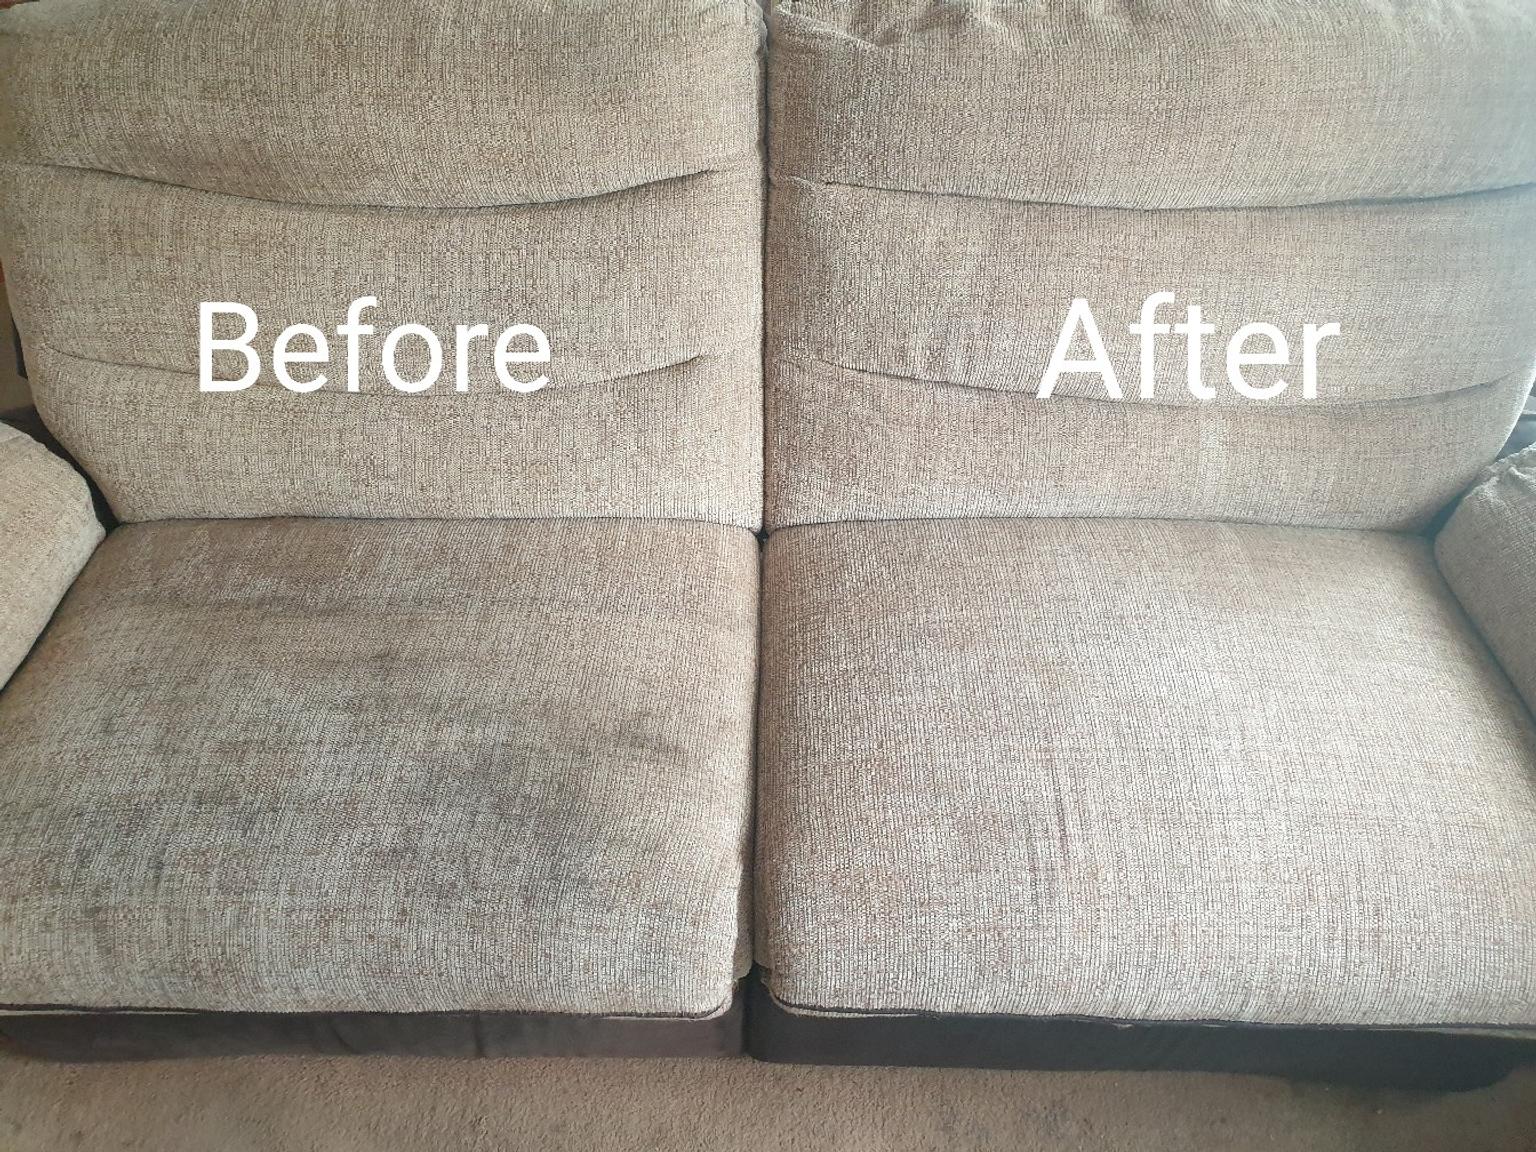 Carpet Upholstery Cleaning In N14 Enfield Fur 25 00 Zum